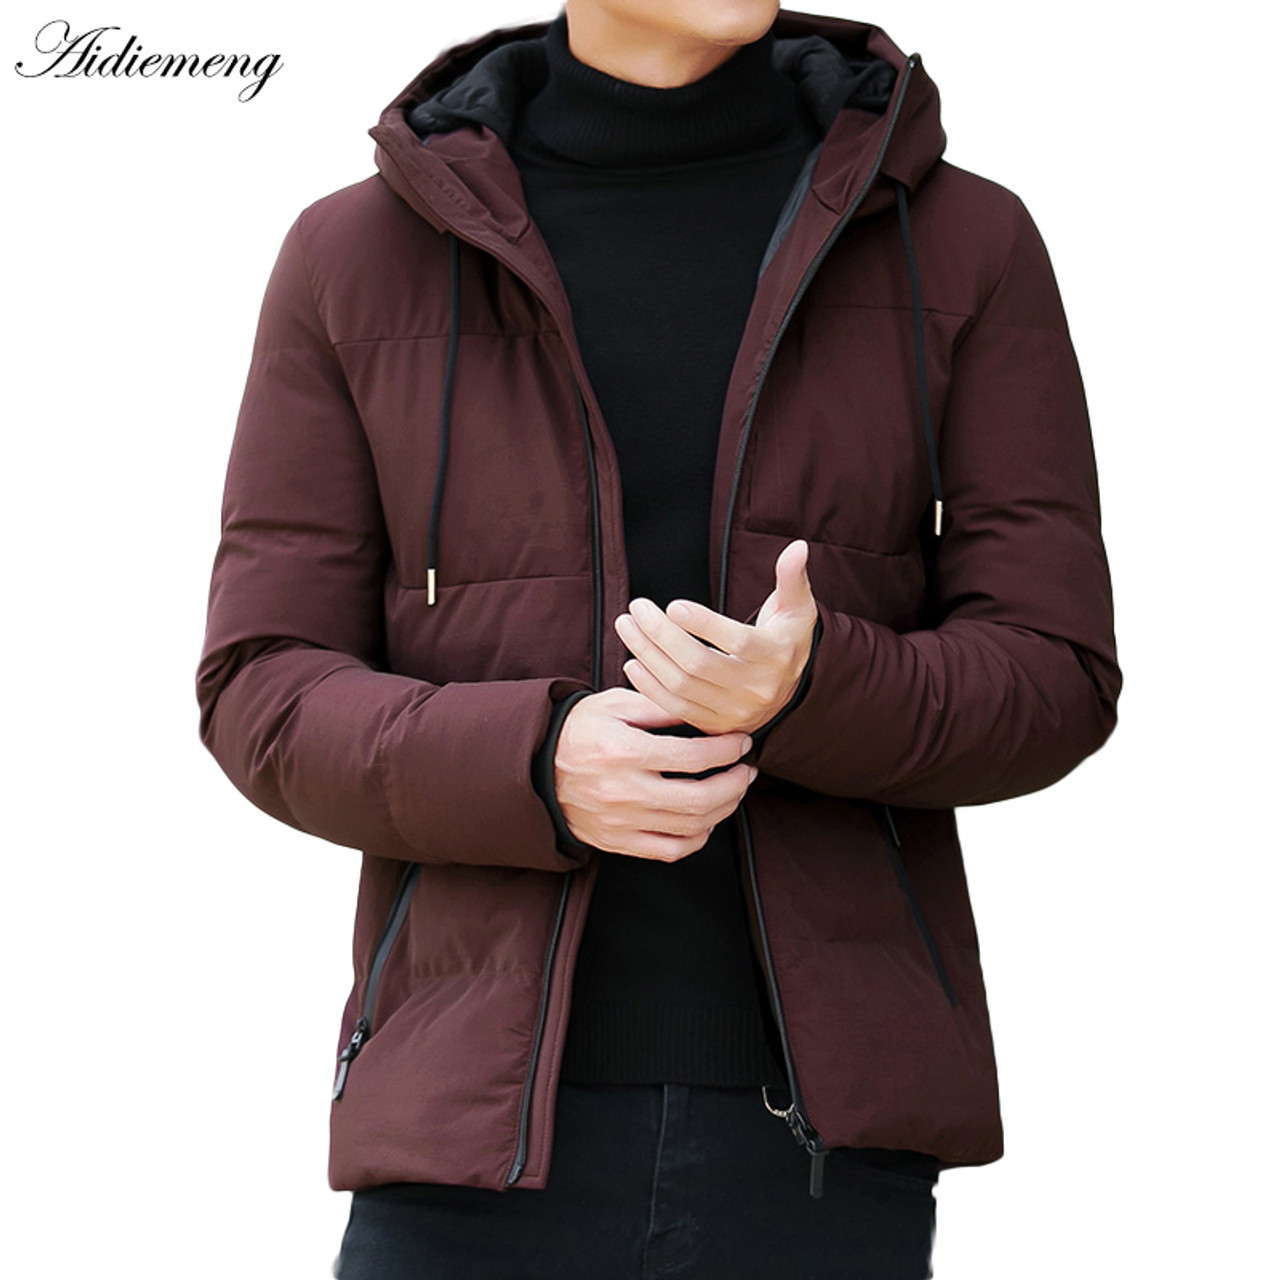 mens warm jacket with hood